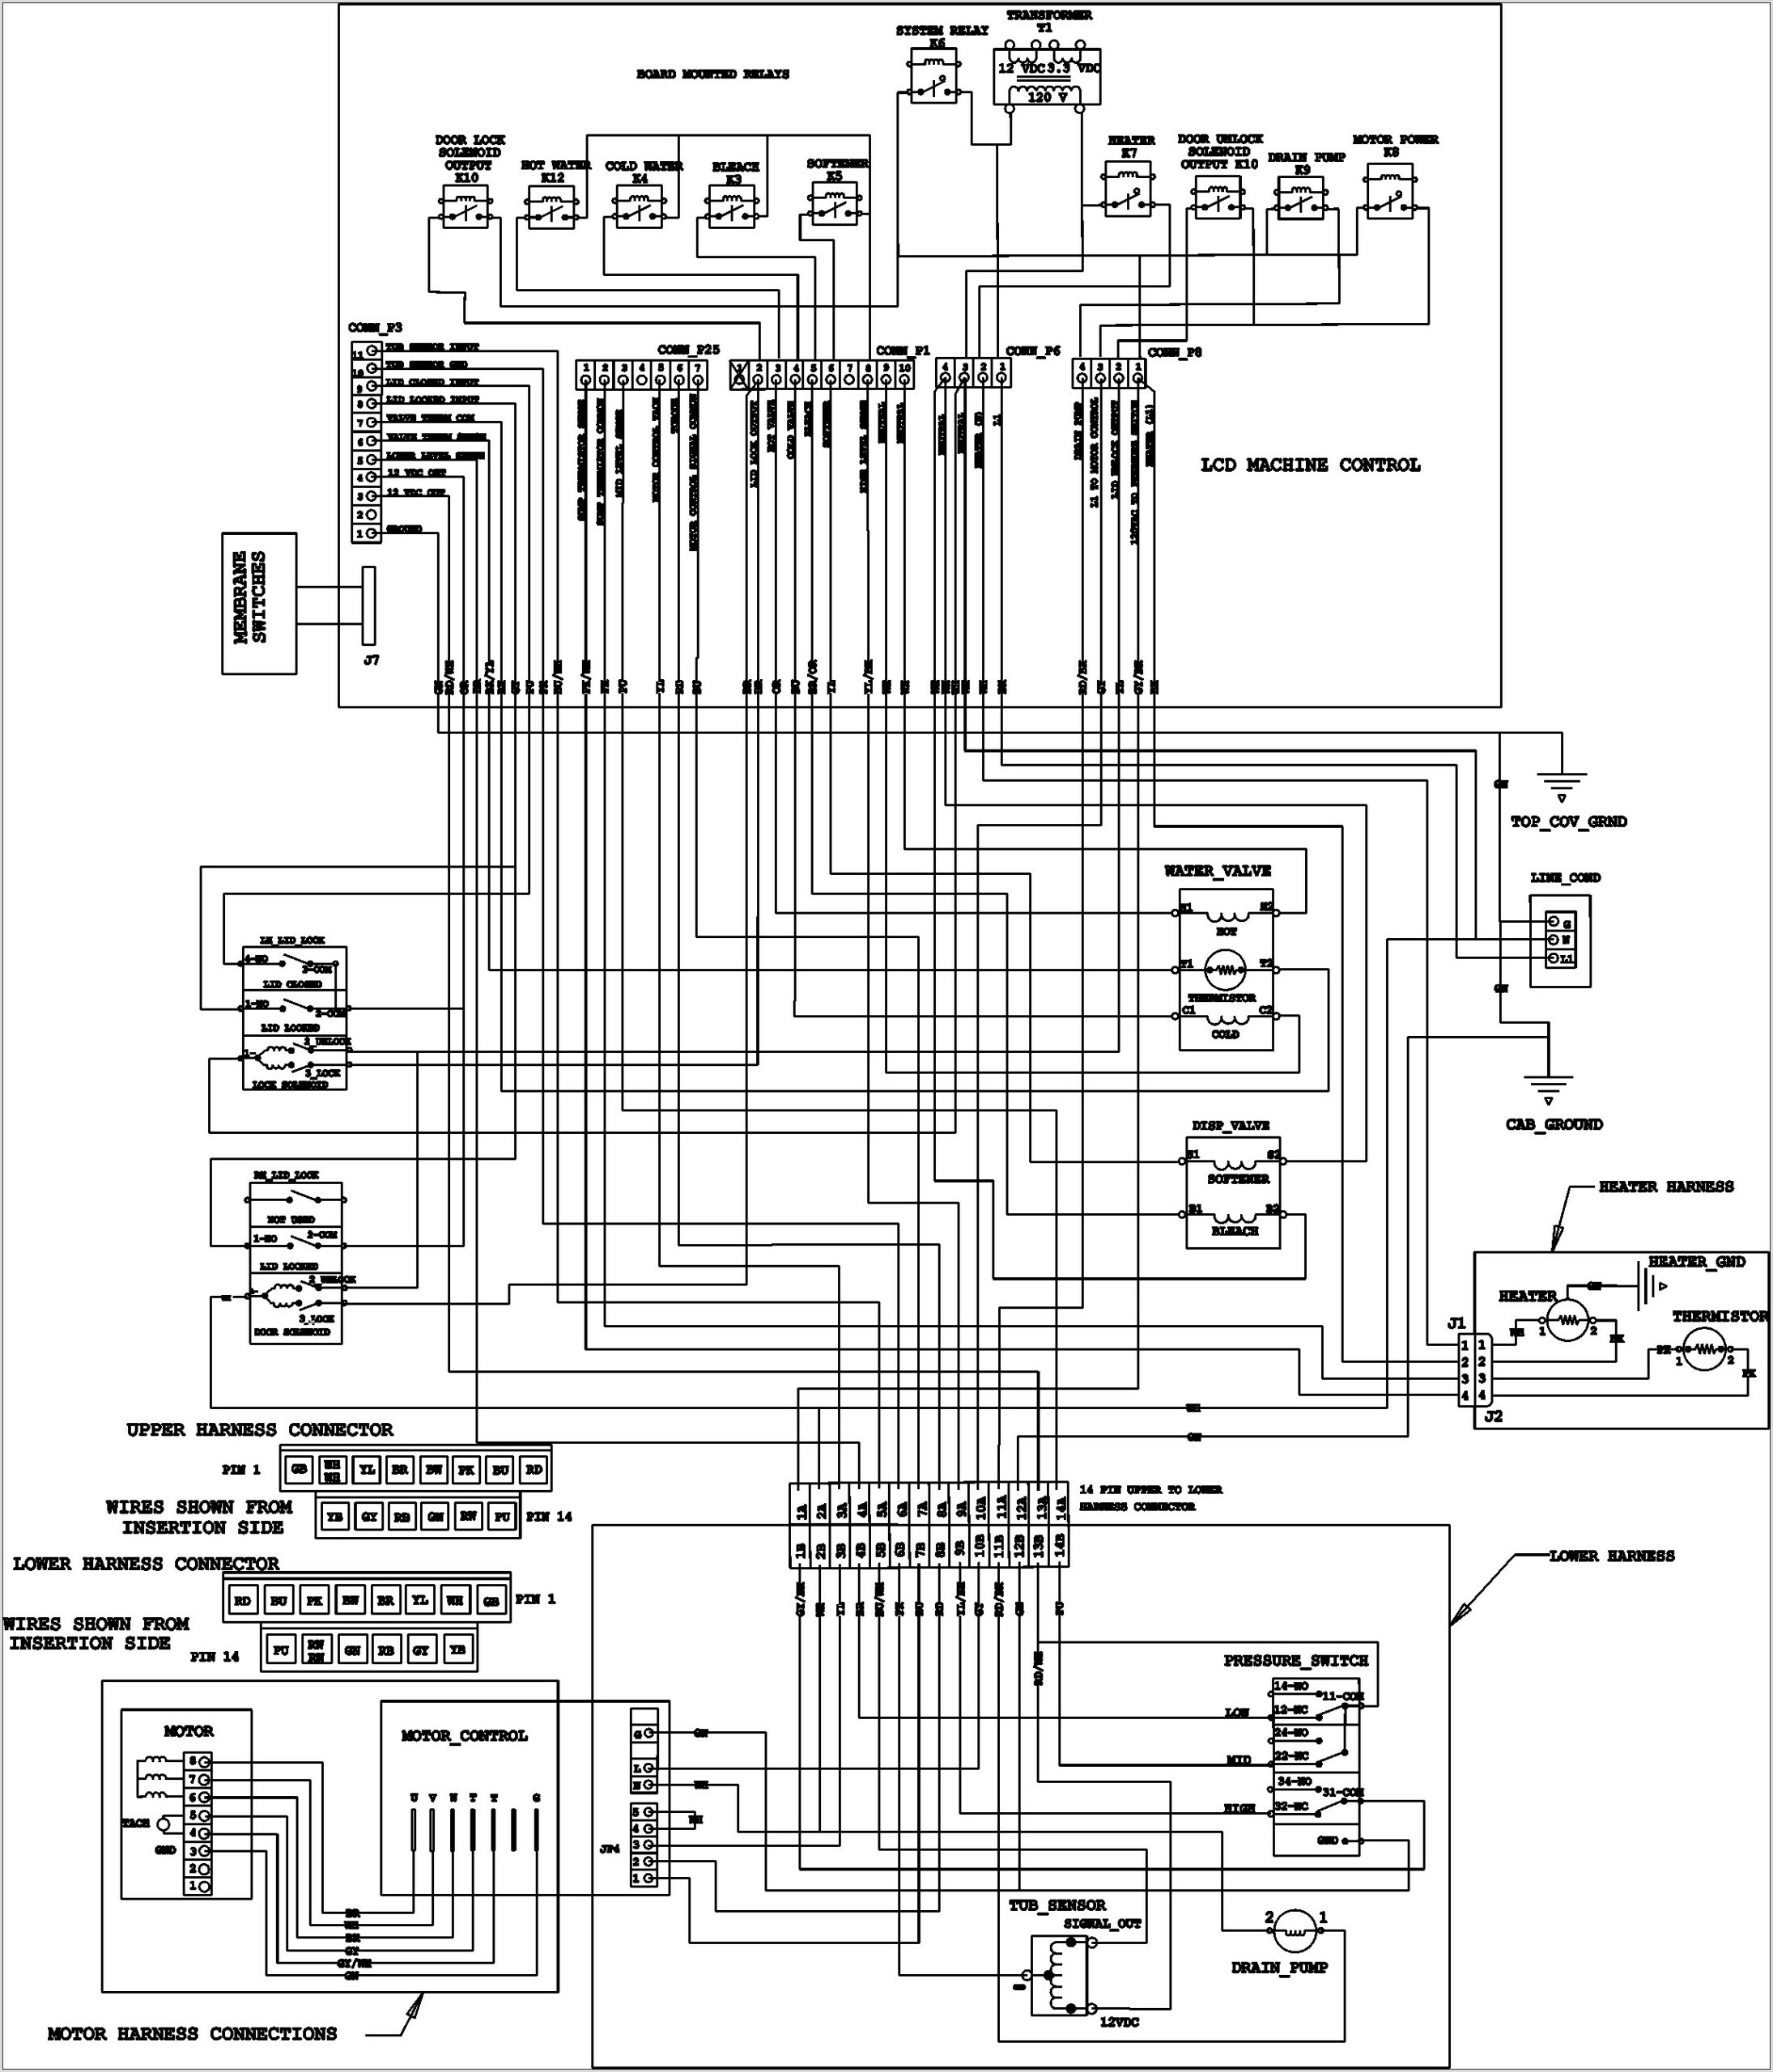 Maytag Washer Motor Wiring Diagram